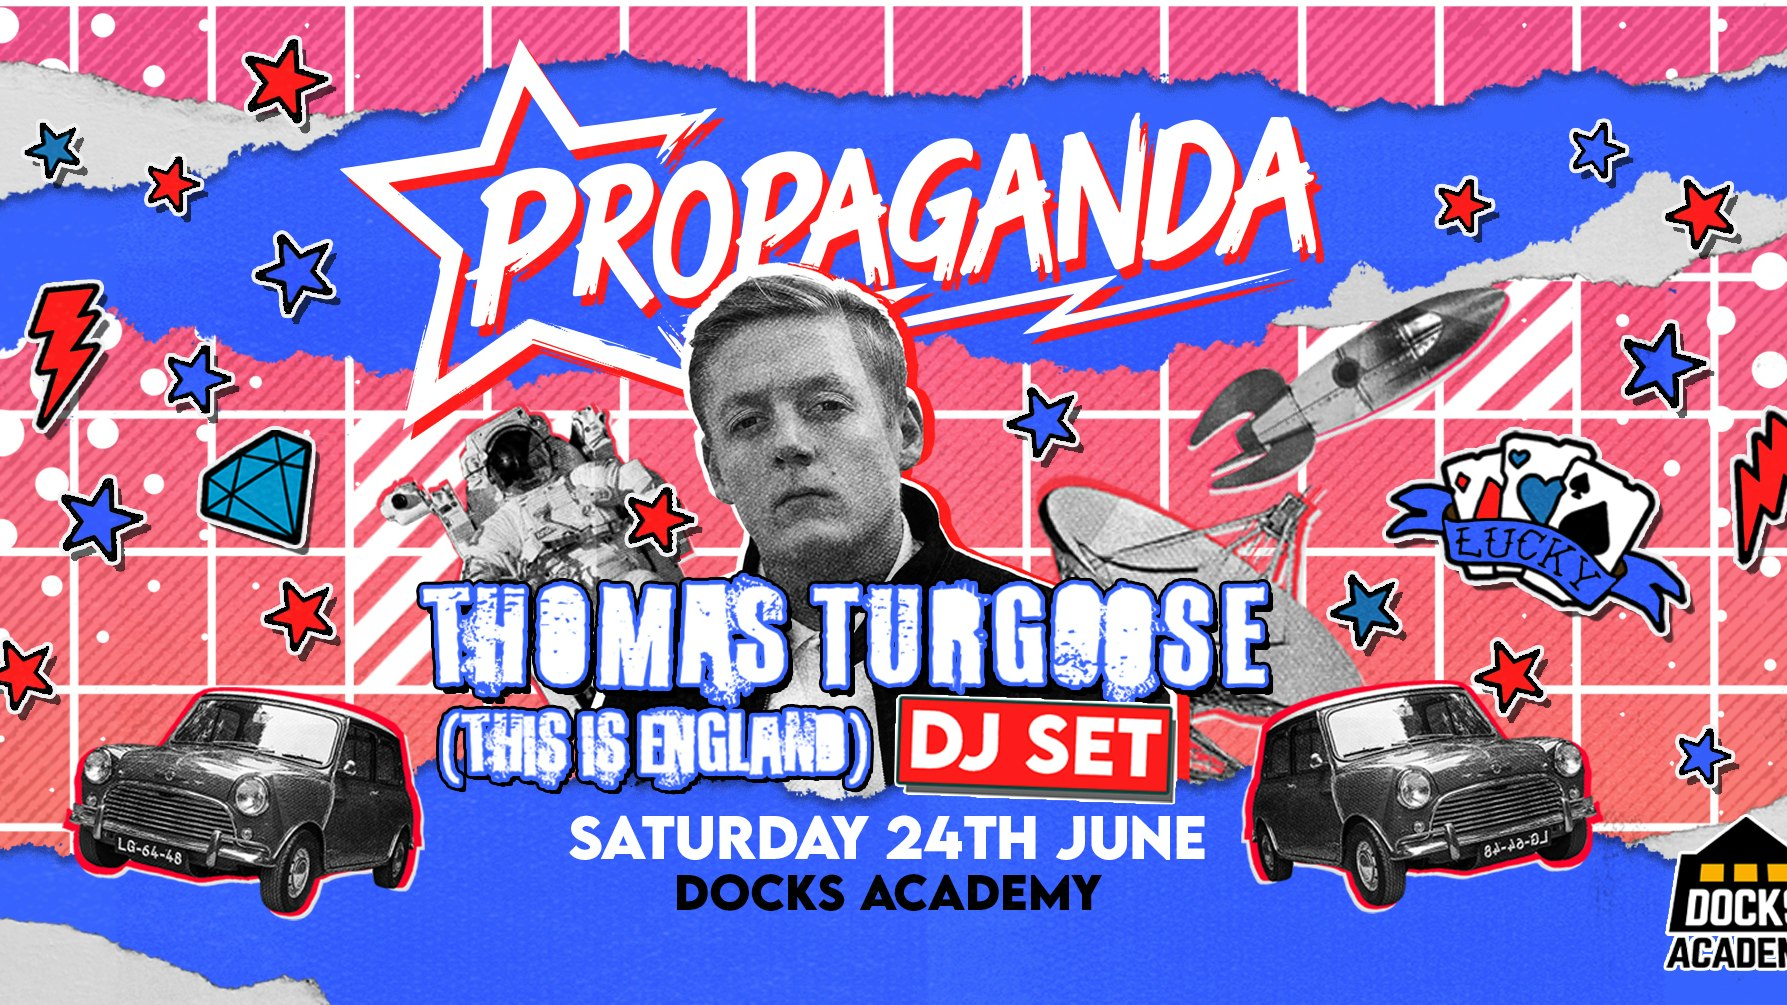 Propaganda – Thomas Turgoose (This Is England) DJ Set!